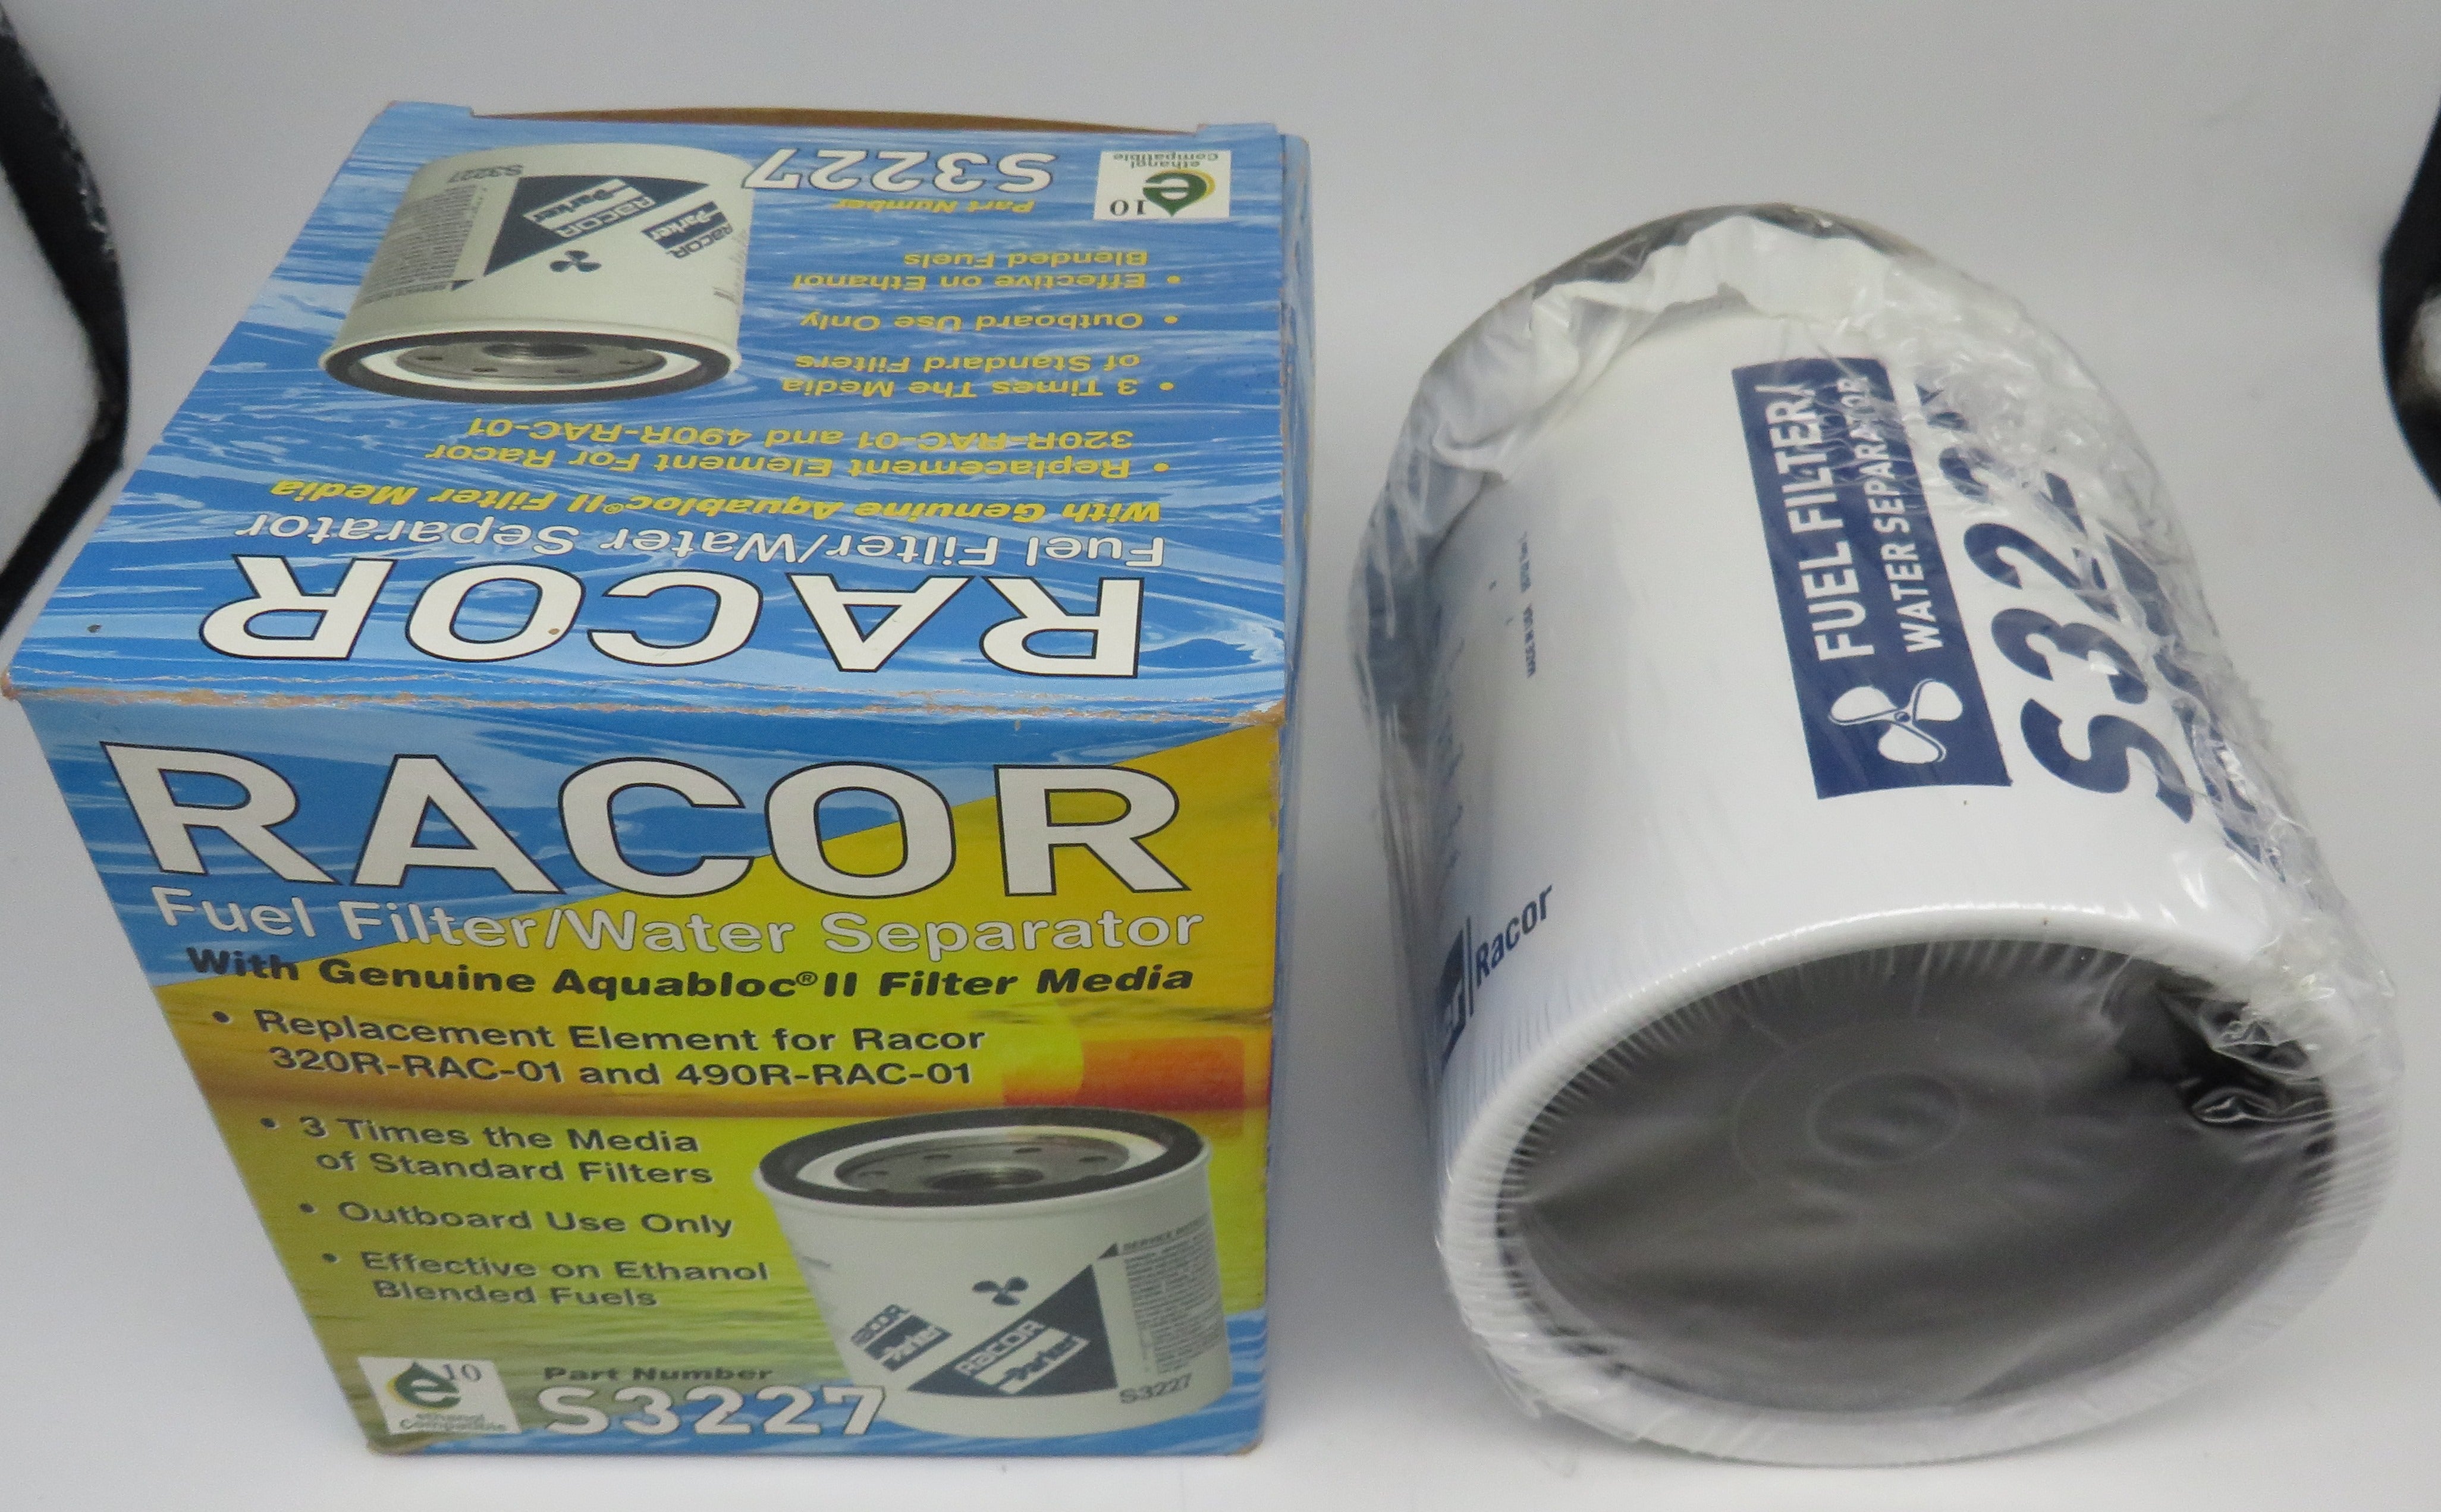 S3227 Racor Fuel Filter Water Separator